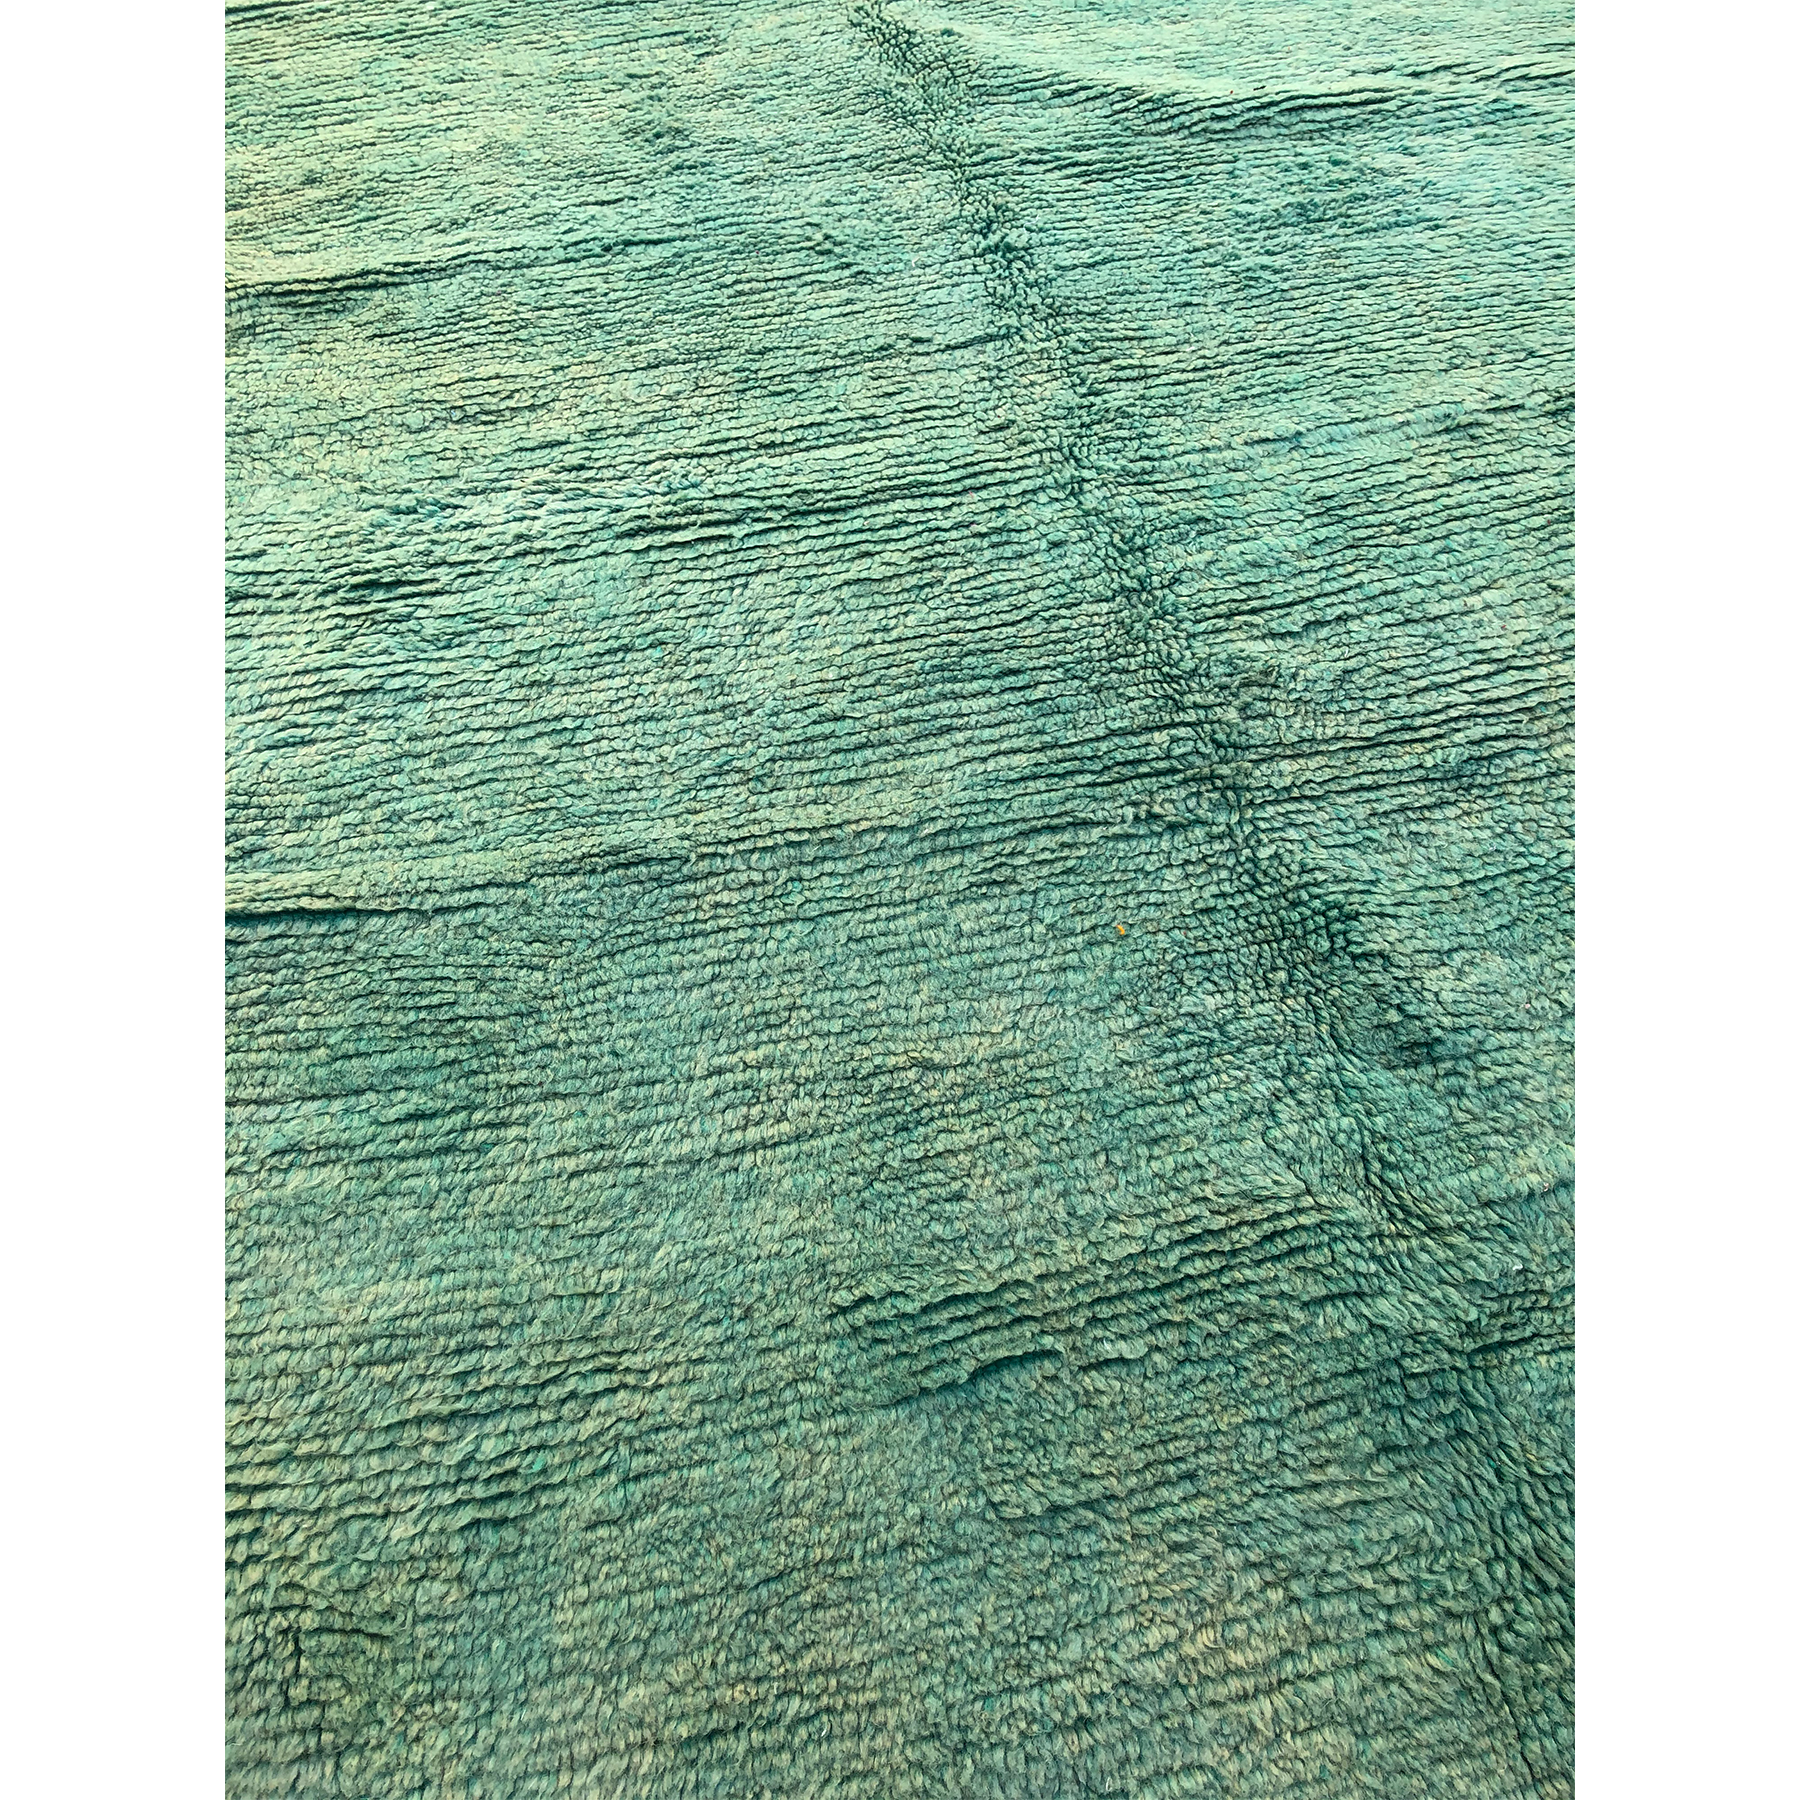 NISHANE - Moroccan area rug in shades of green - Kantara | Moroccan Rugs